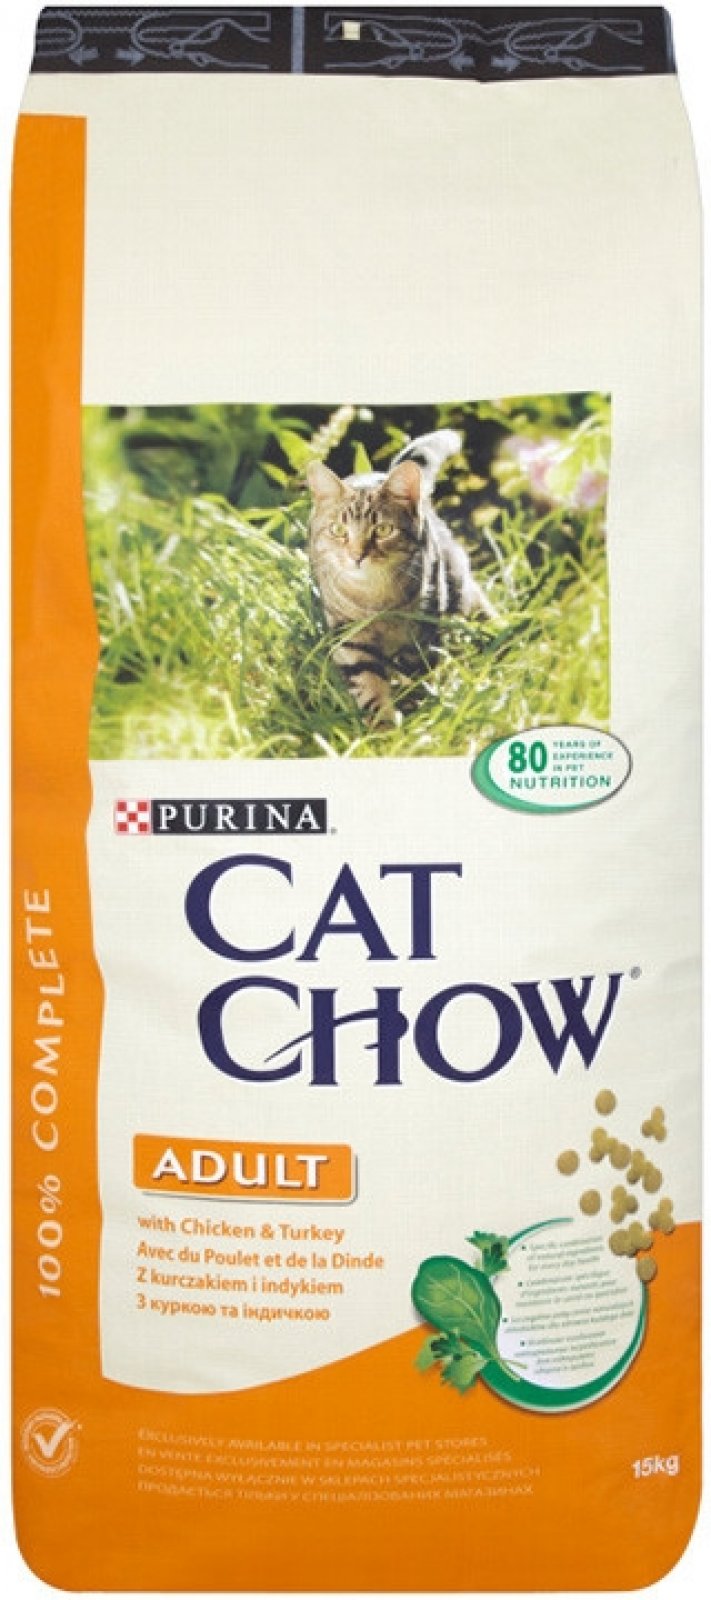 Purina Cat Chow Adult morka + kura 15kg